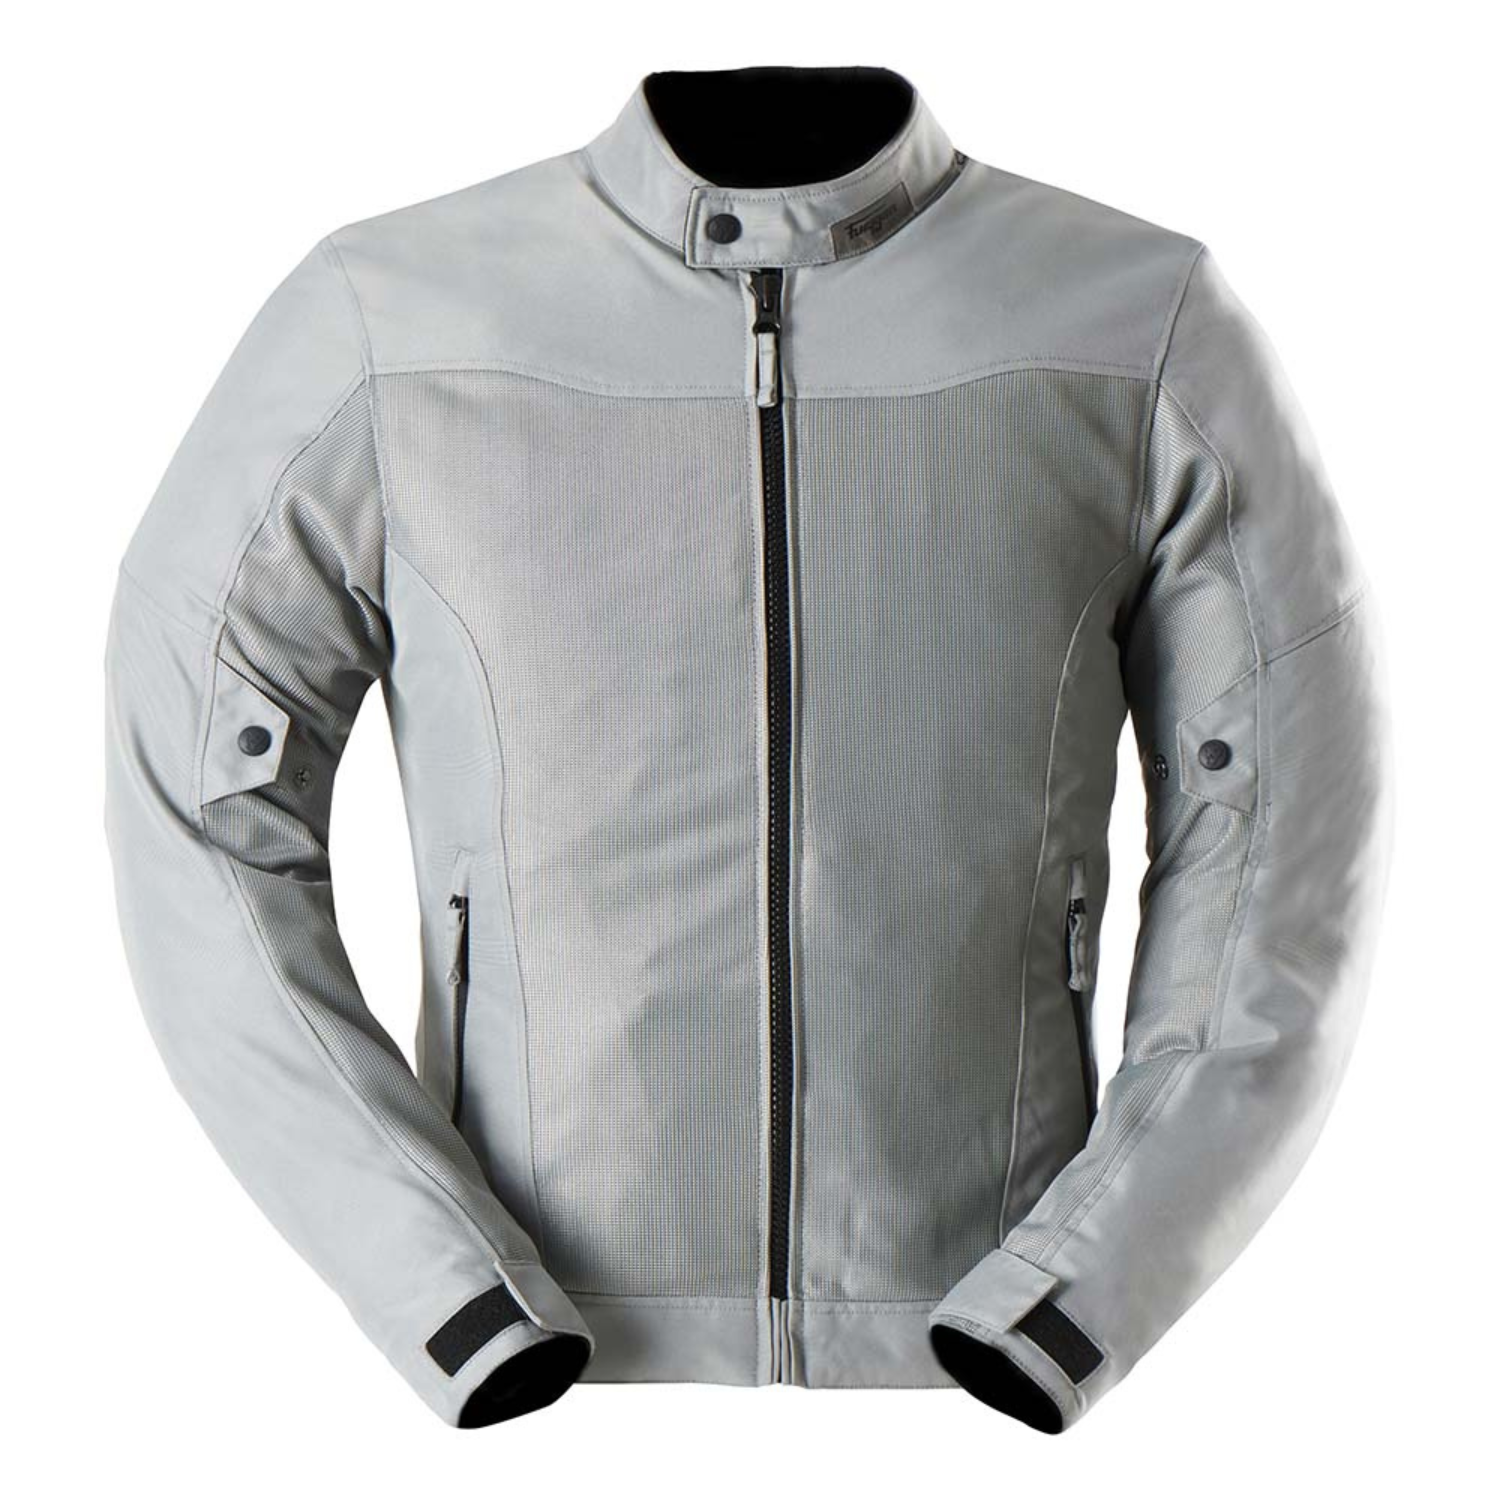 Image of Furygan Mistral Evo 3 Jacket Grey Size XL EN